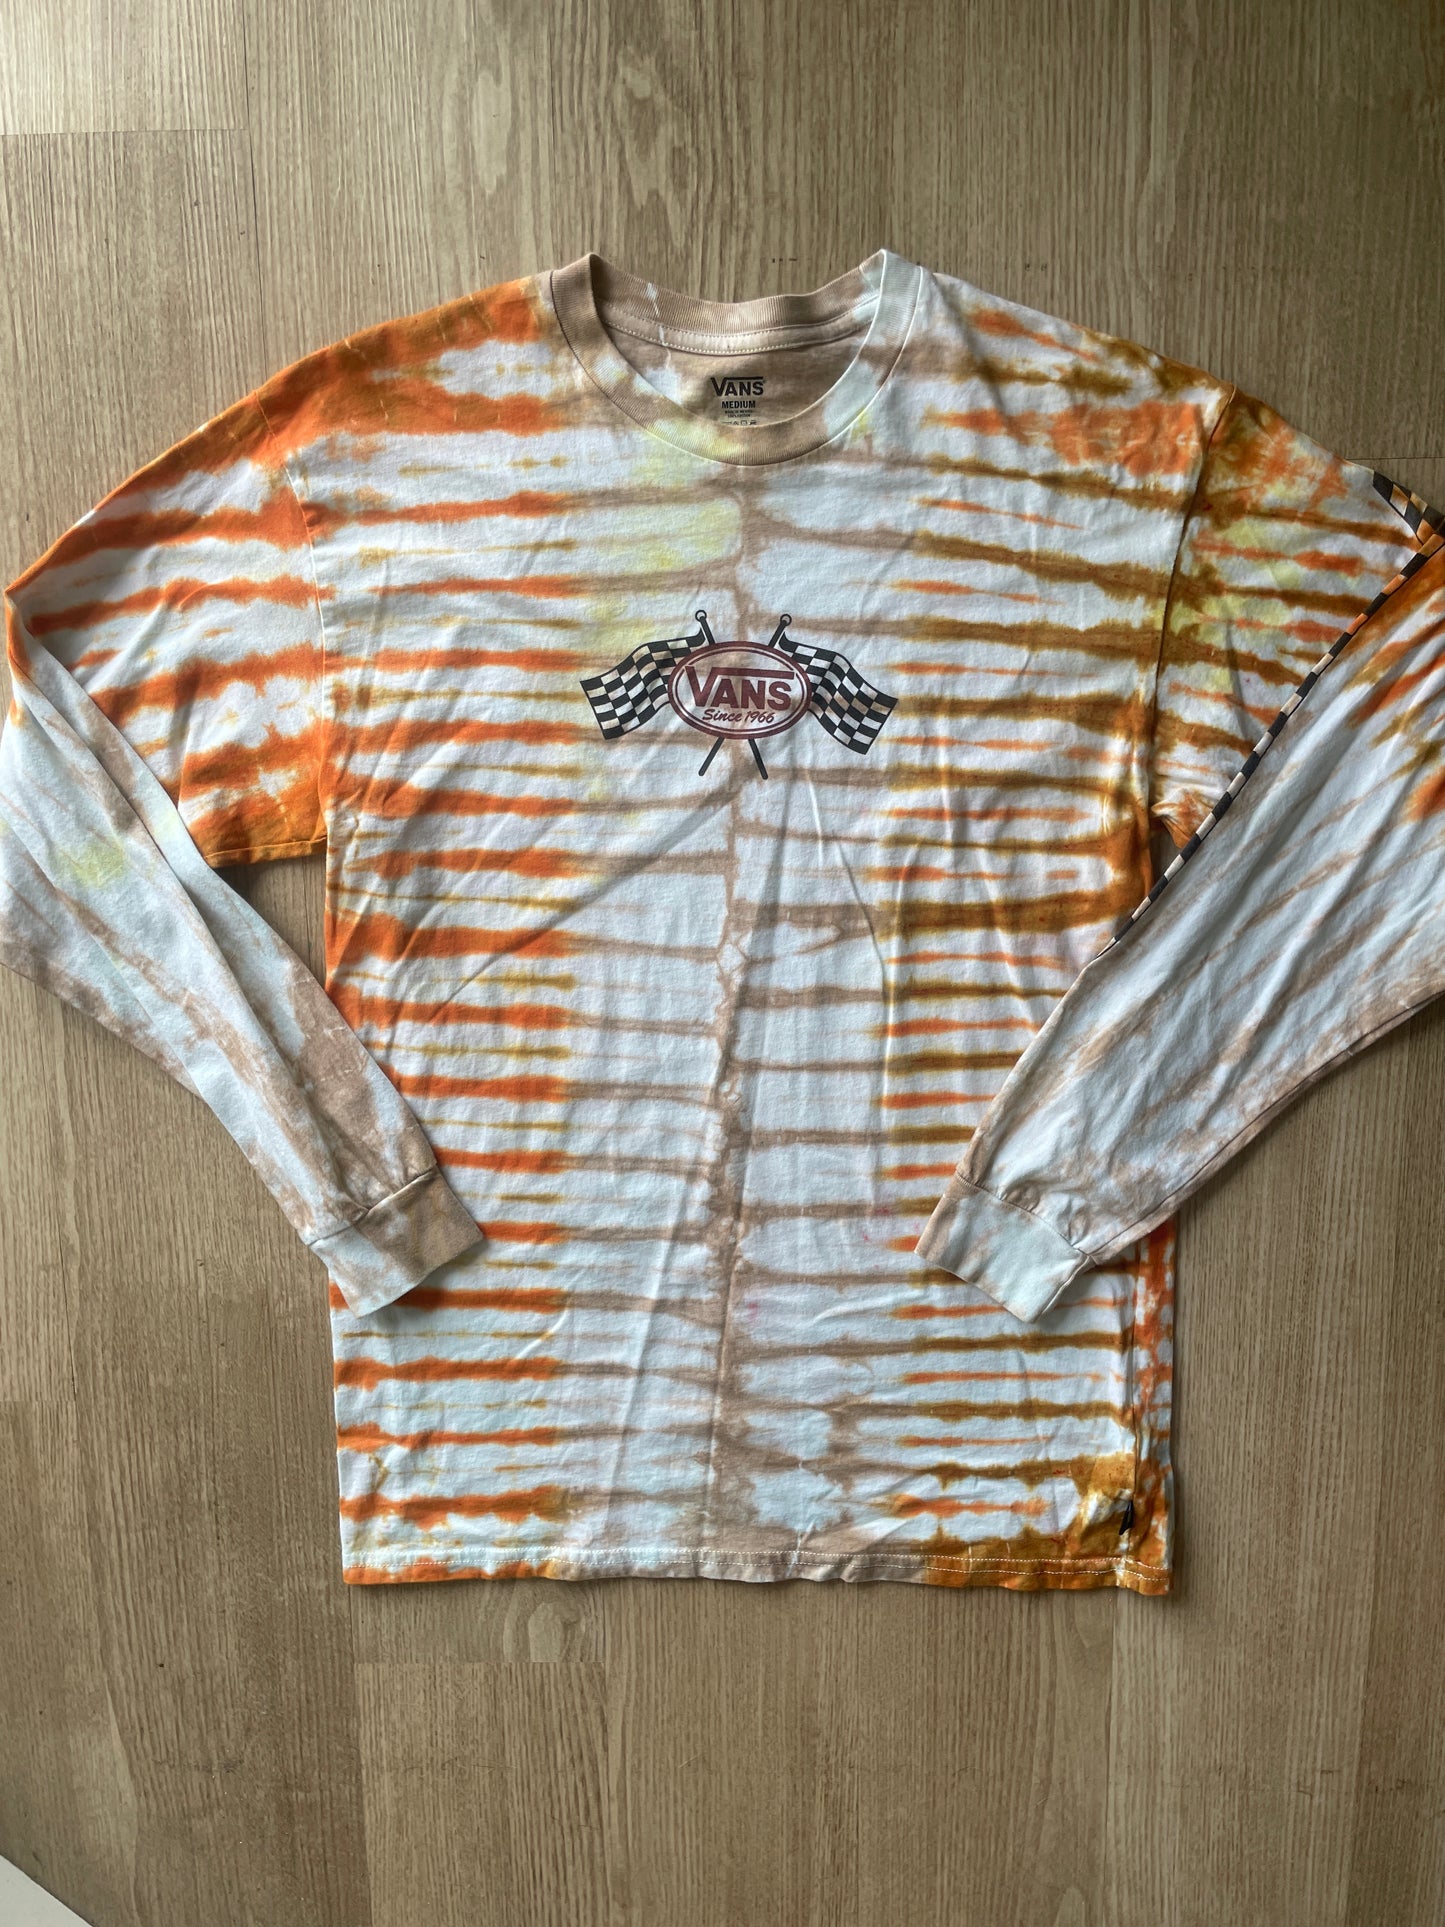 MEDIUM Men’s Vans Checkerboard Handmade Tie Dye T-Shirt | One-Of-a-Kind Orange and Brown Earth Tones Long Sleeve